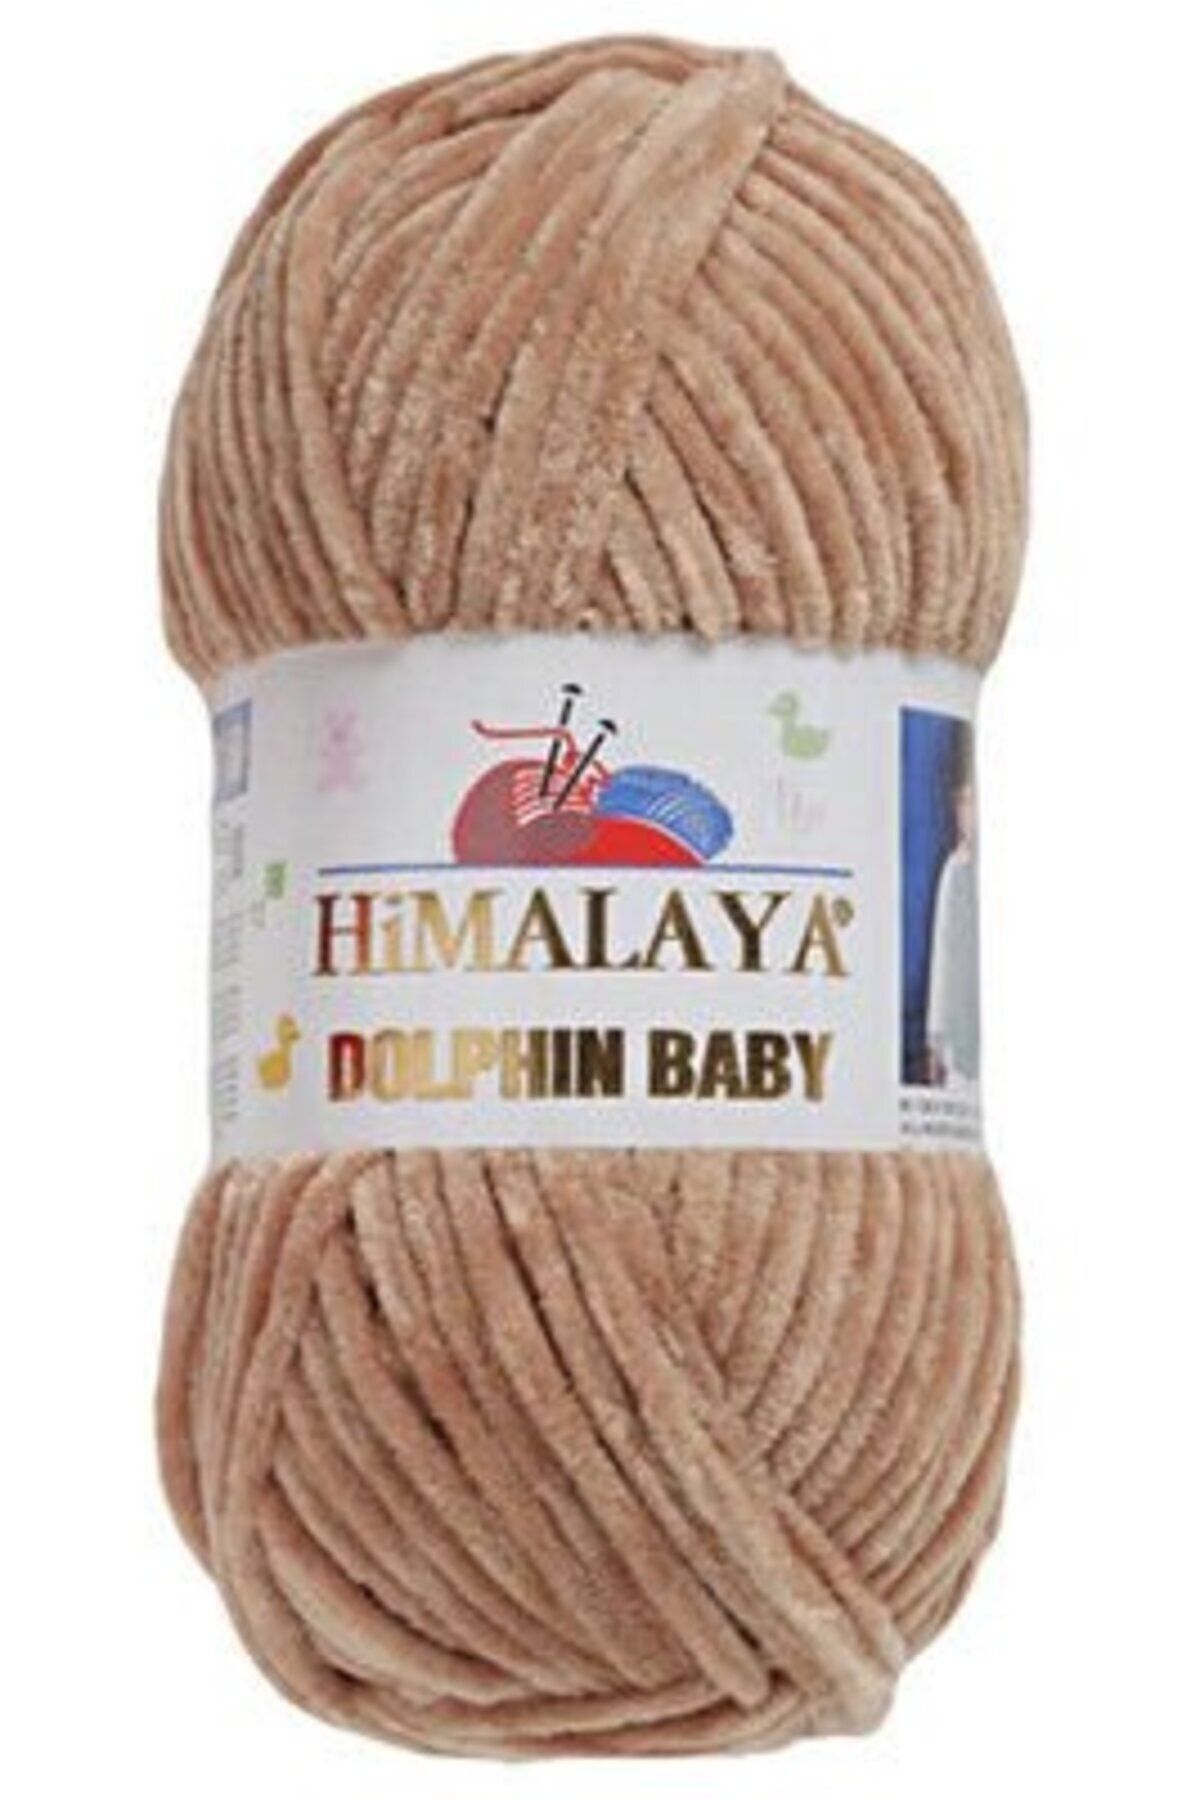 Himalaya Dolphin Baby 80342- 5 Adet Fiyatı, Yorumları - Trendyol